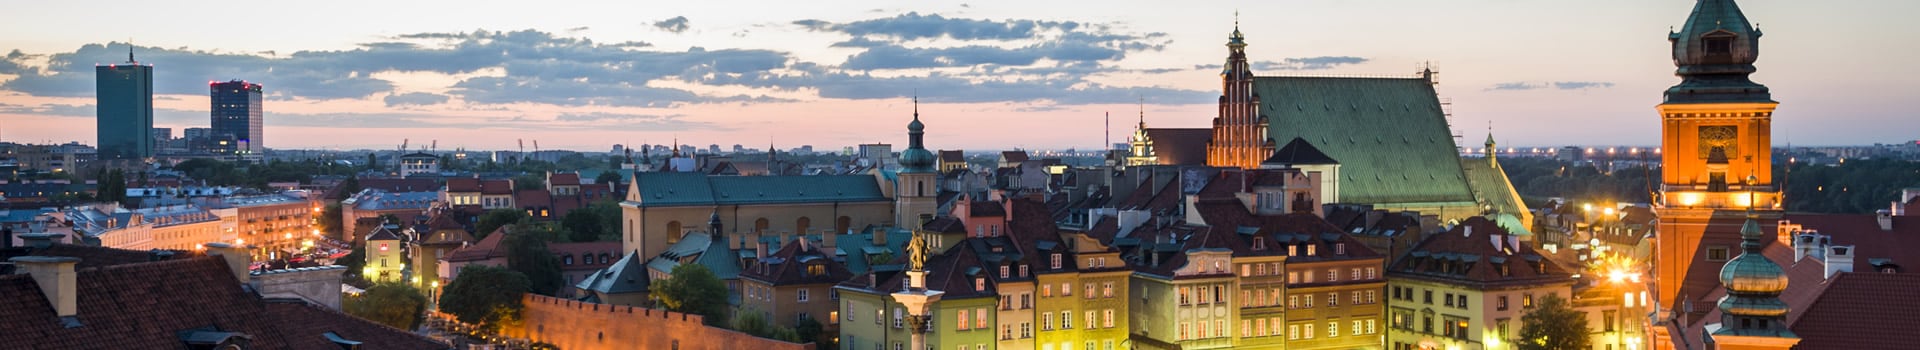 Nuremberg - Varsóvia